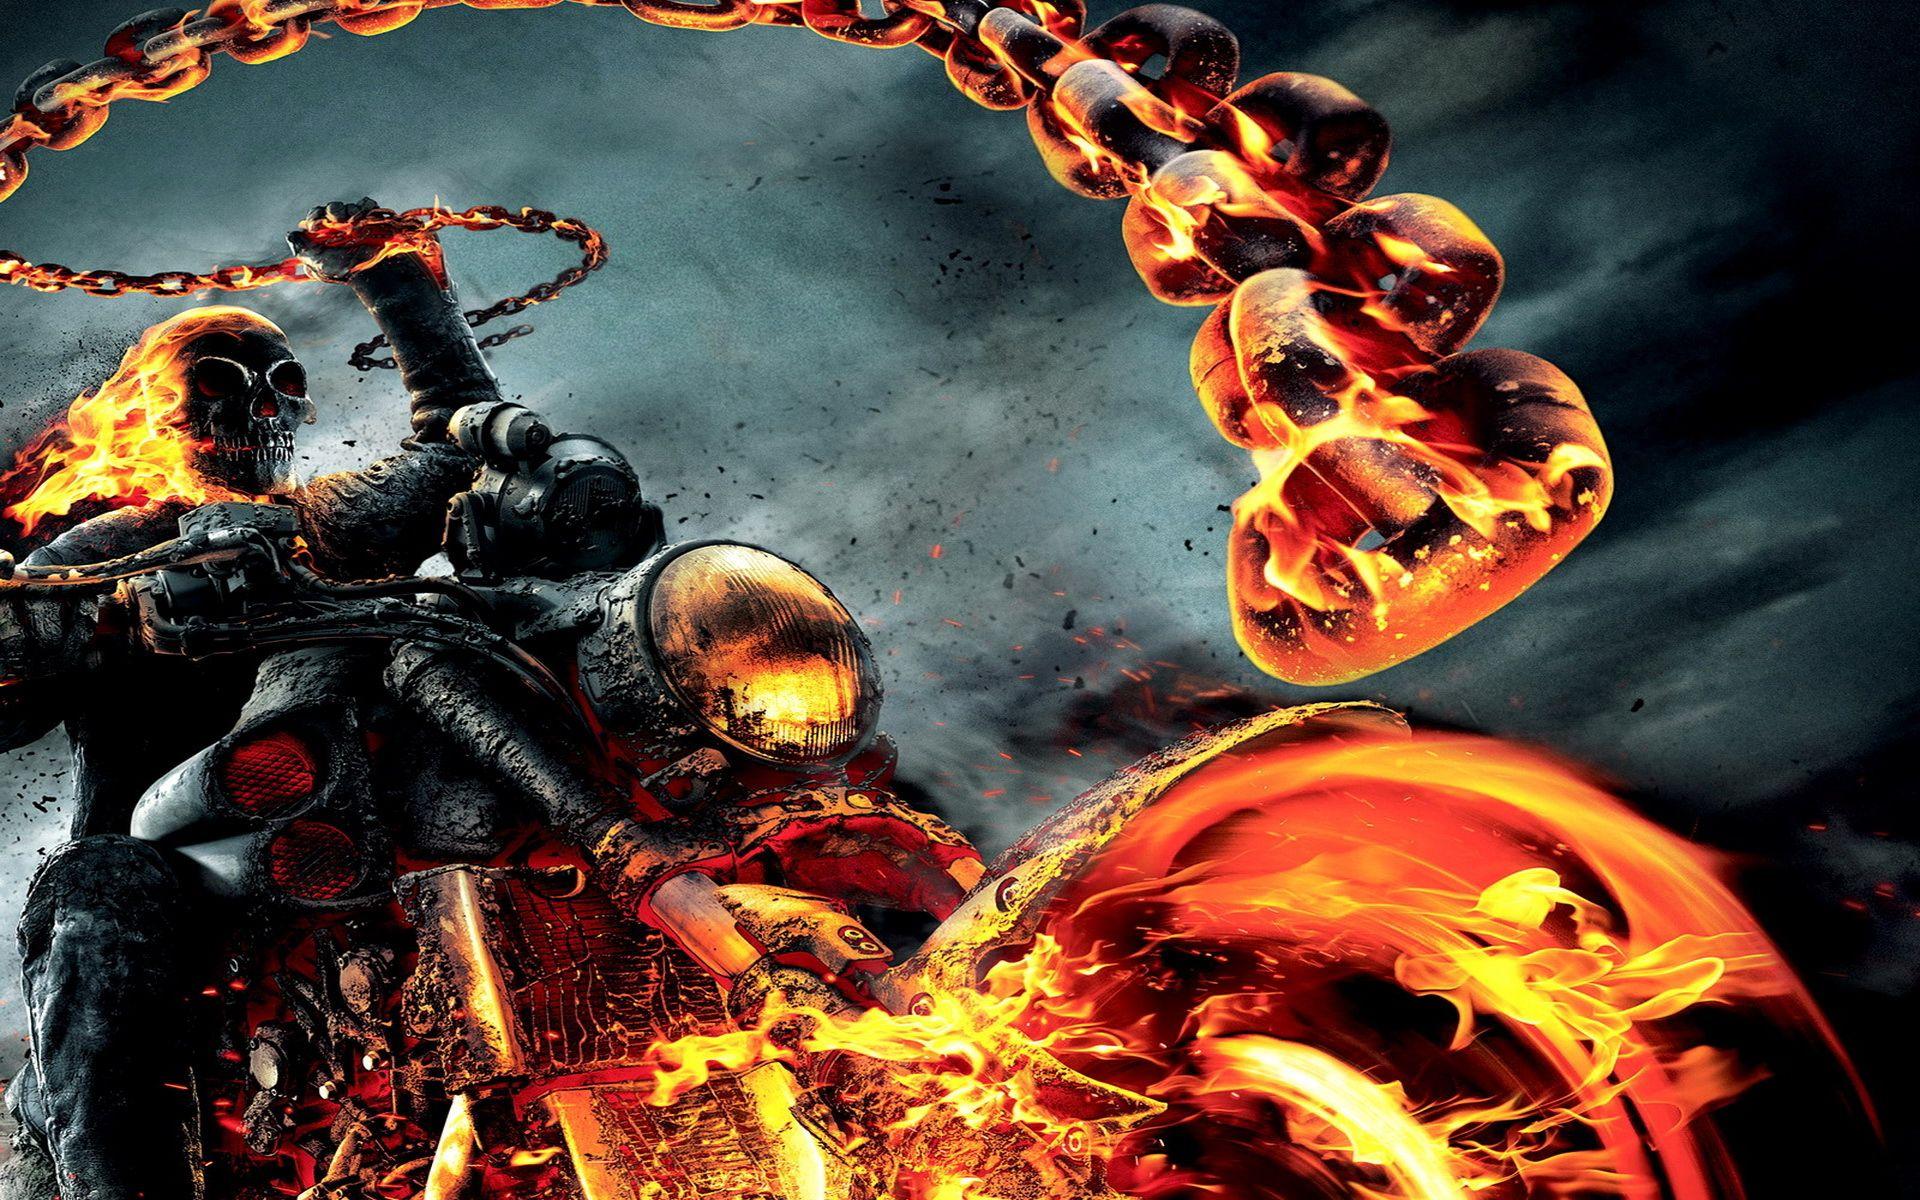 MFB› 49 Wallpaper of Ghost Rider HD